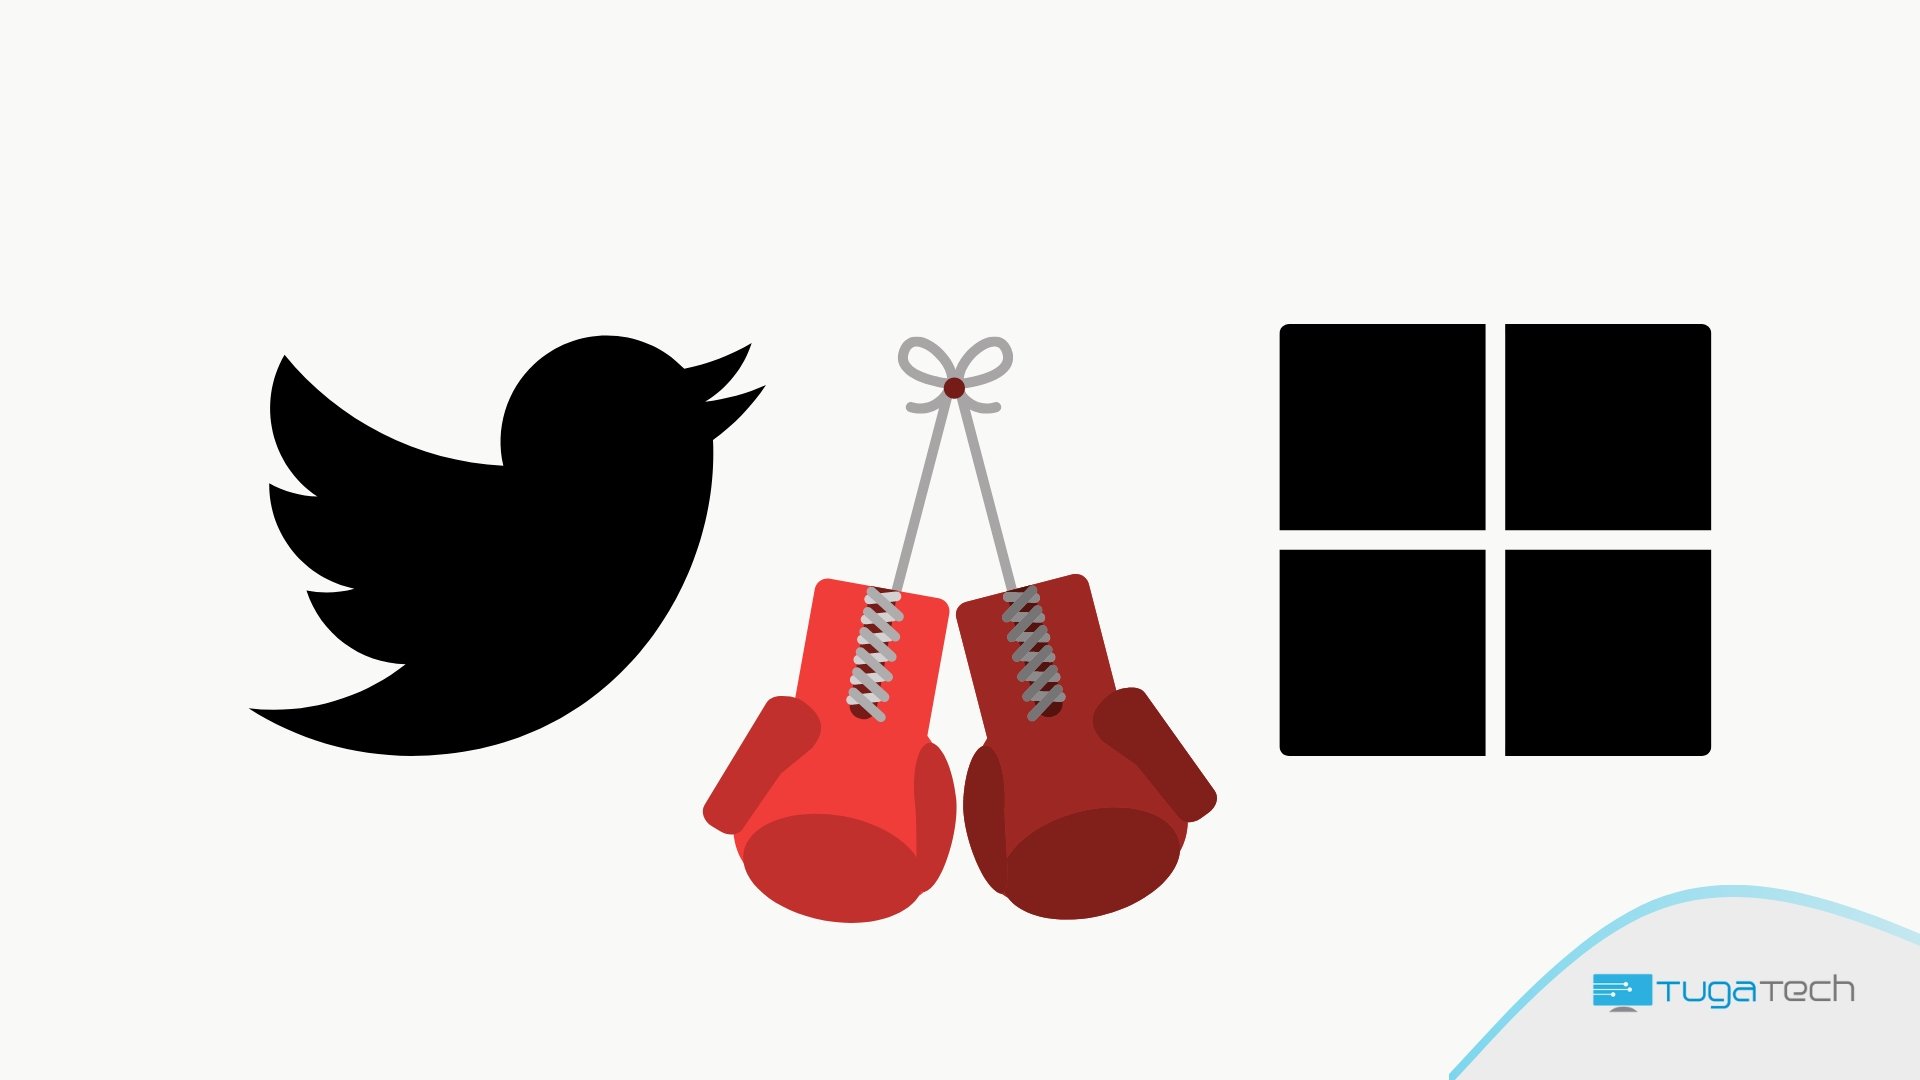 Microsoft vs Twitter